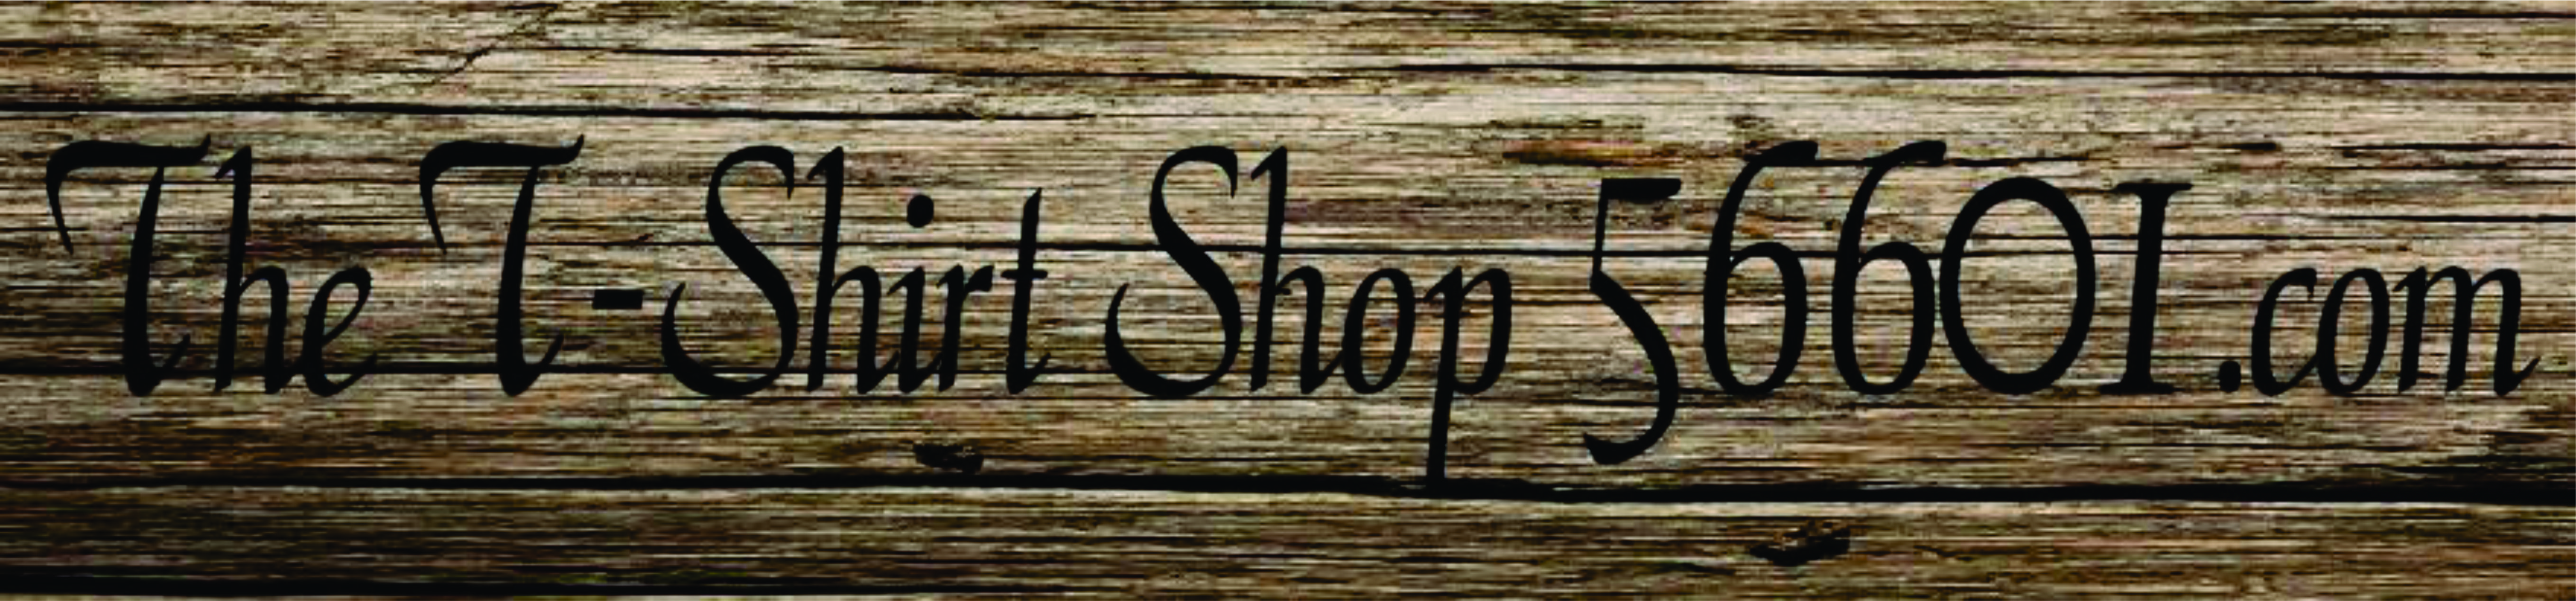 T-SHIRTS - The T-Shirt Shop 56601